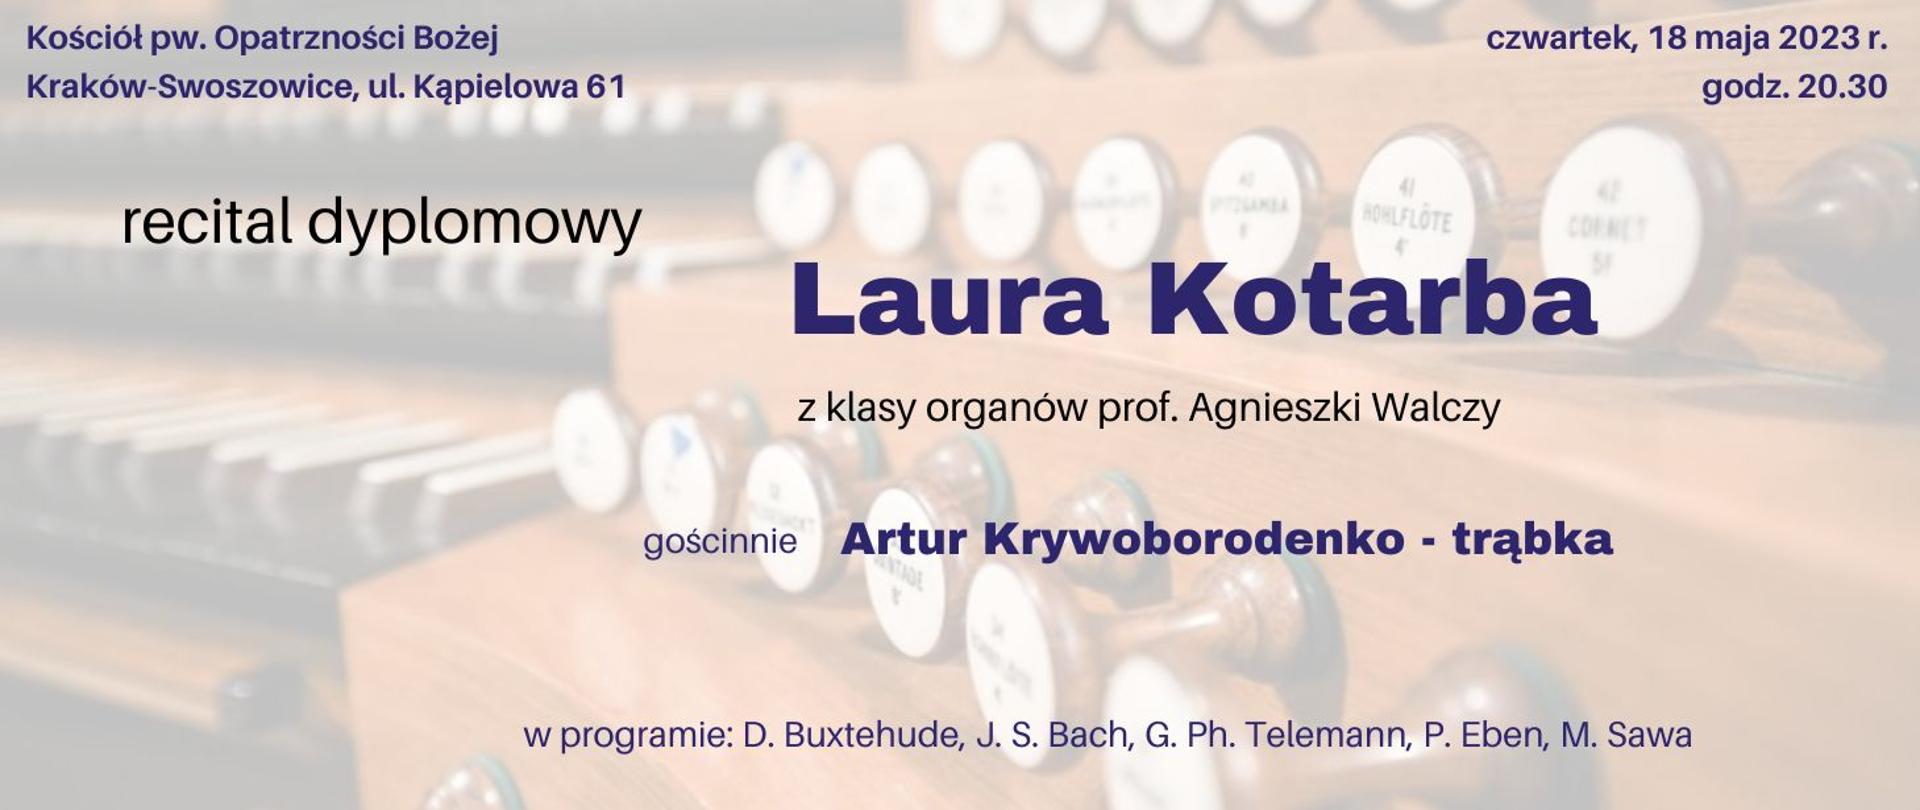 Recital dyplomowy Laura Kotarba 18.05.2023 grafika delikatna rozmyte organy